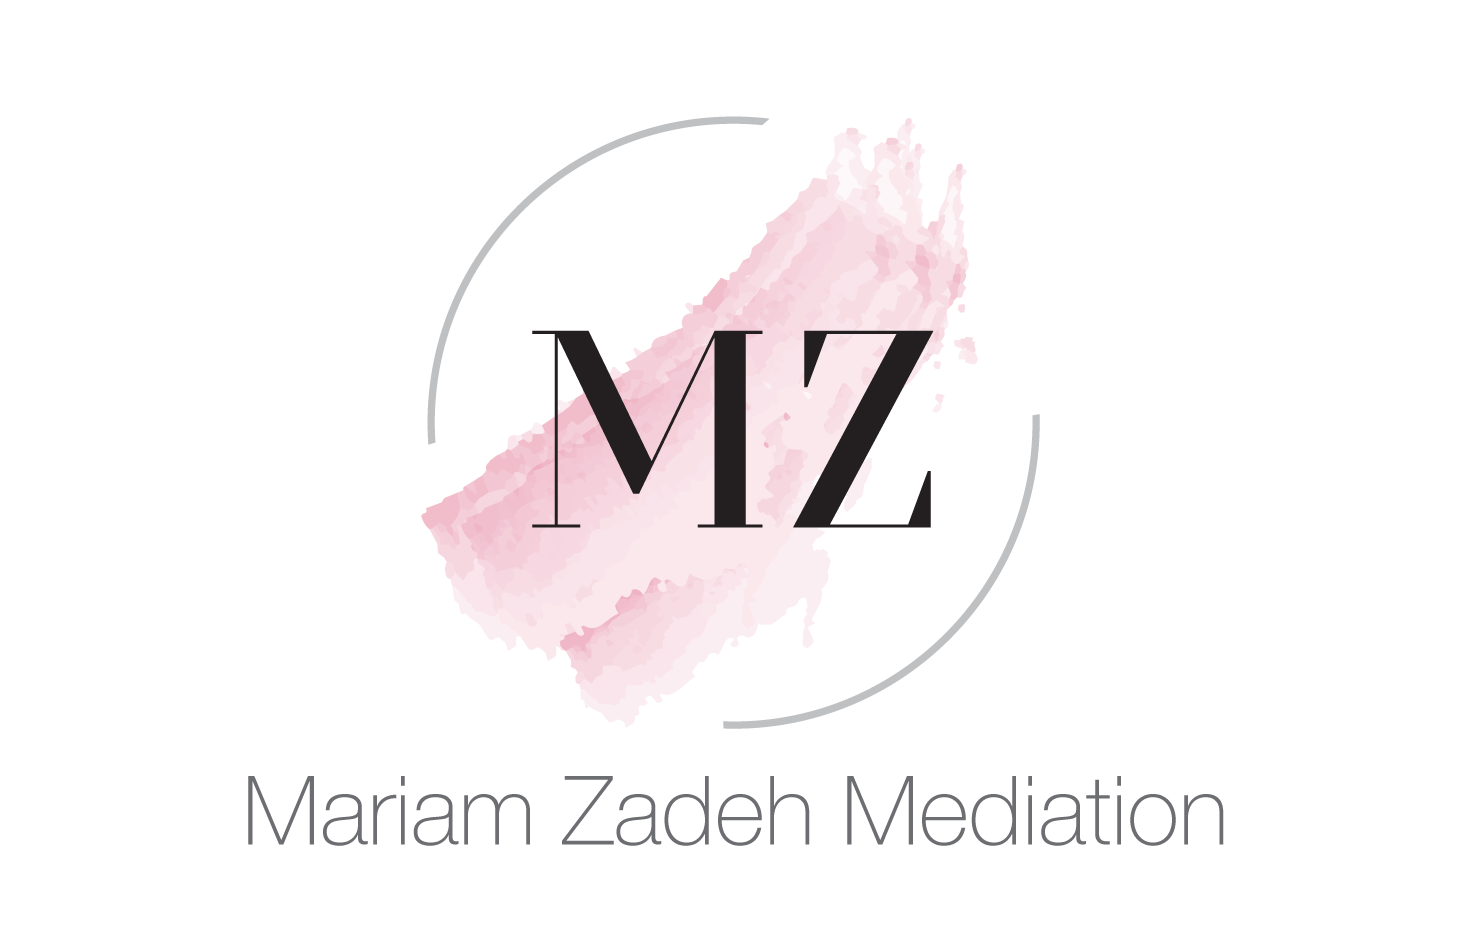 Mariam Zadeh Mediation